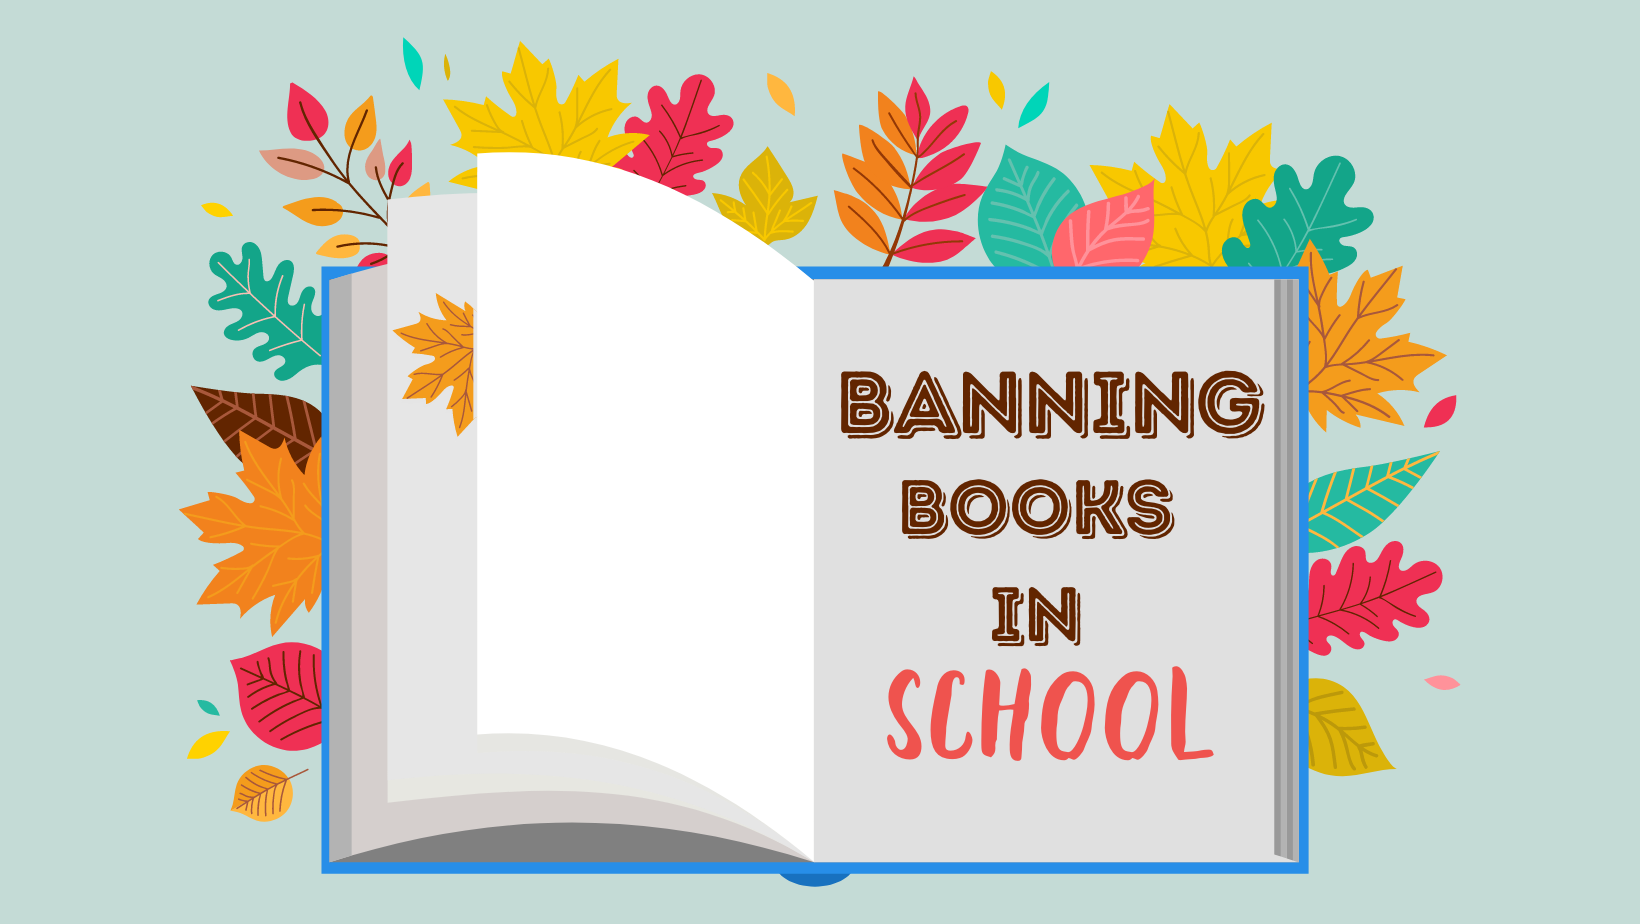 Banning Books in School